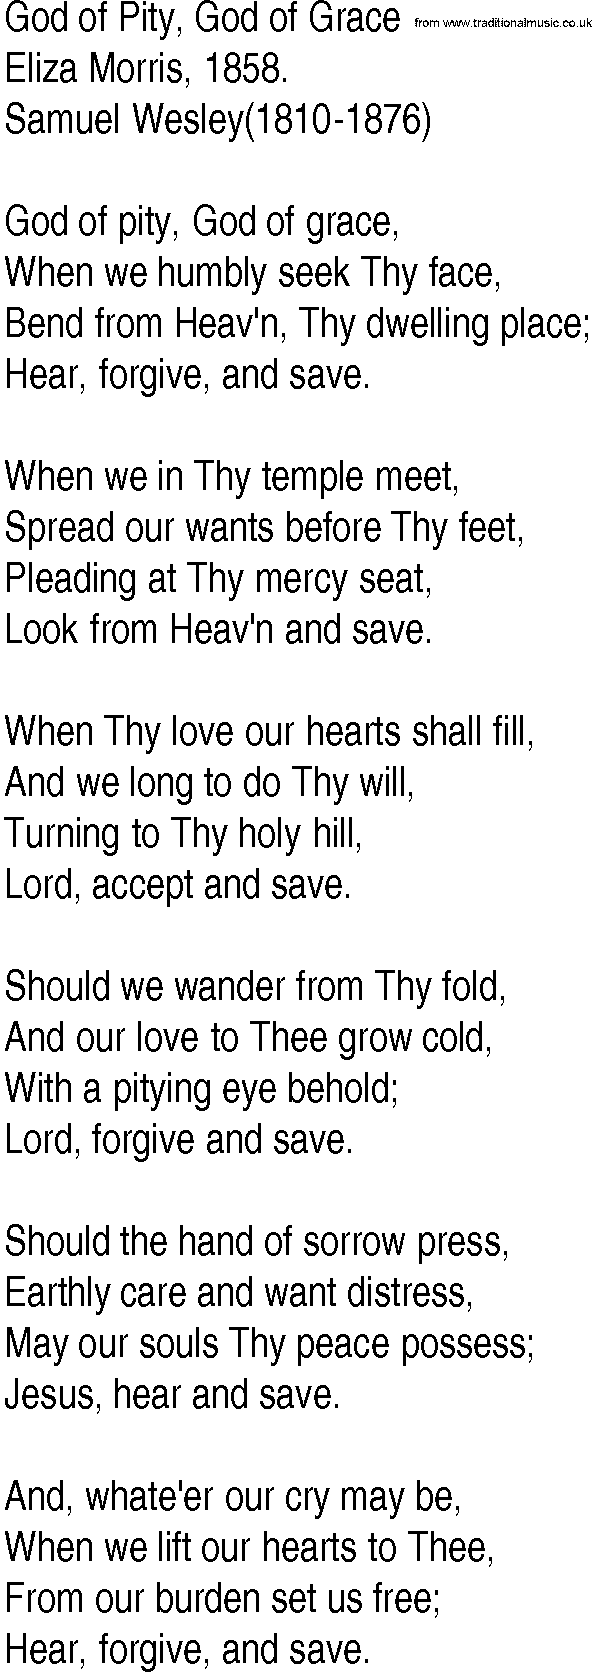 Hymn and Gospel Song: God of Pity, God of Grace by Eliza Morris lyrics